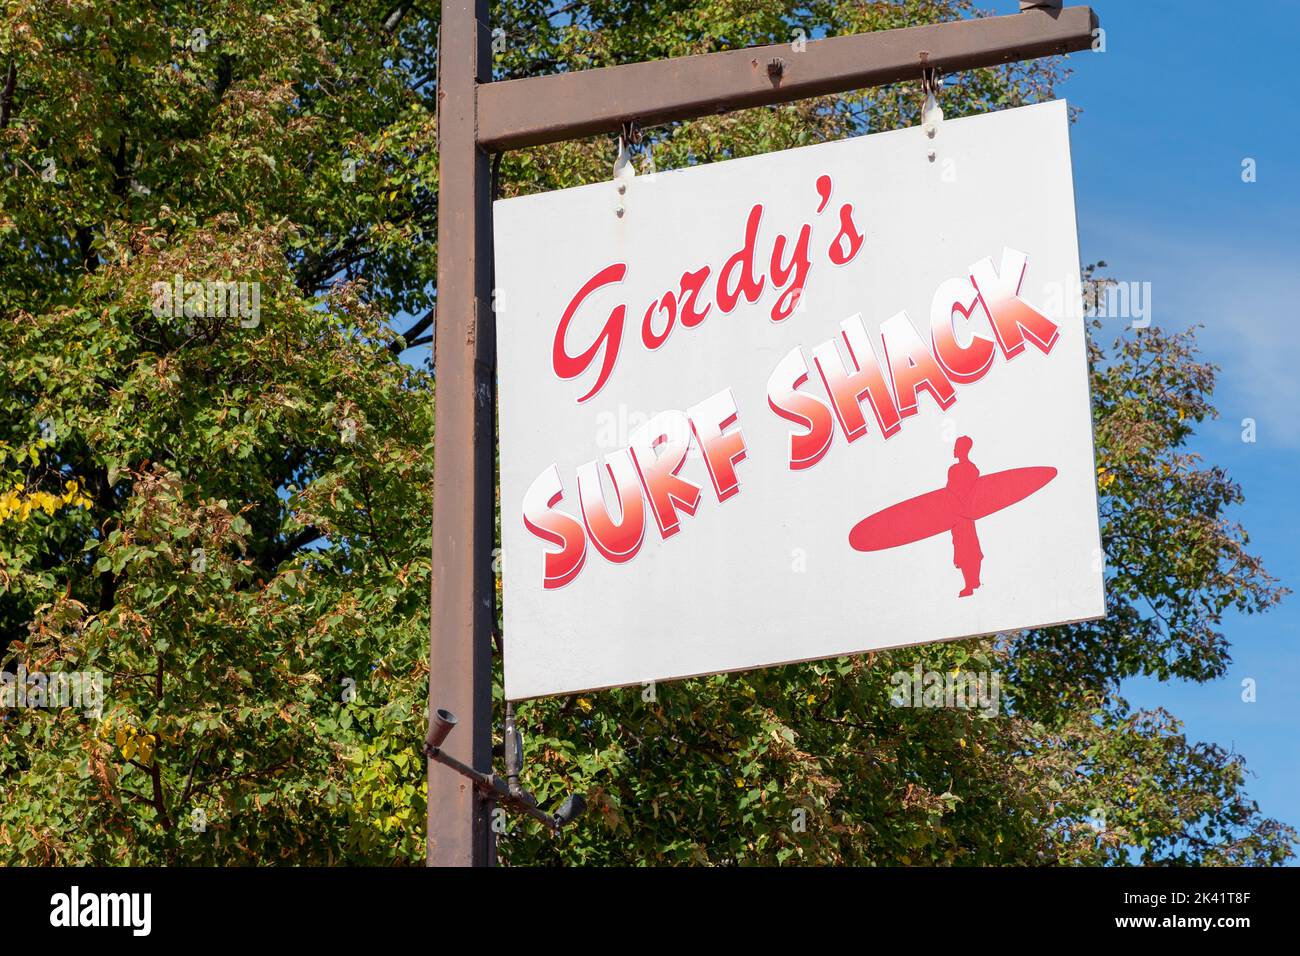 Hanging sign for Gordy's Surf Shack bar restaurant diner, Fontana on the Lake Geneva, Wisconsin, America. Stock Photo